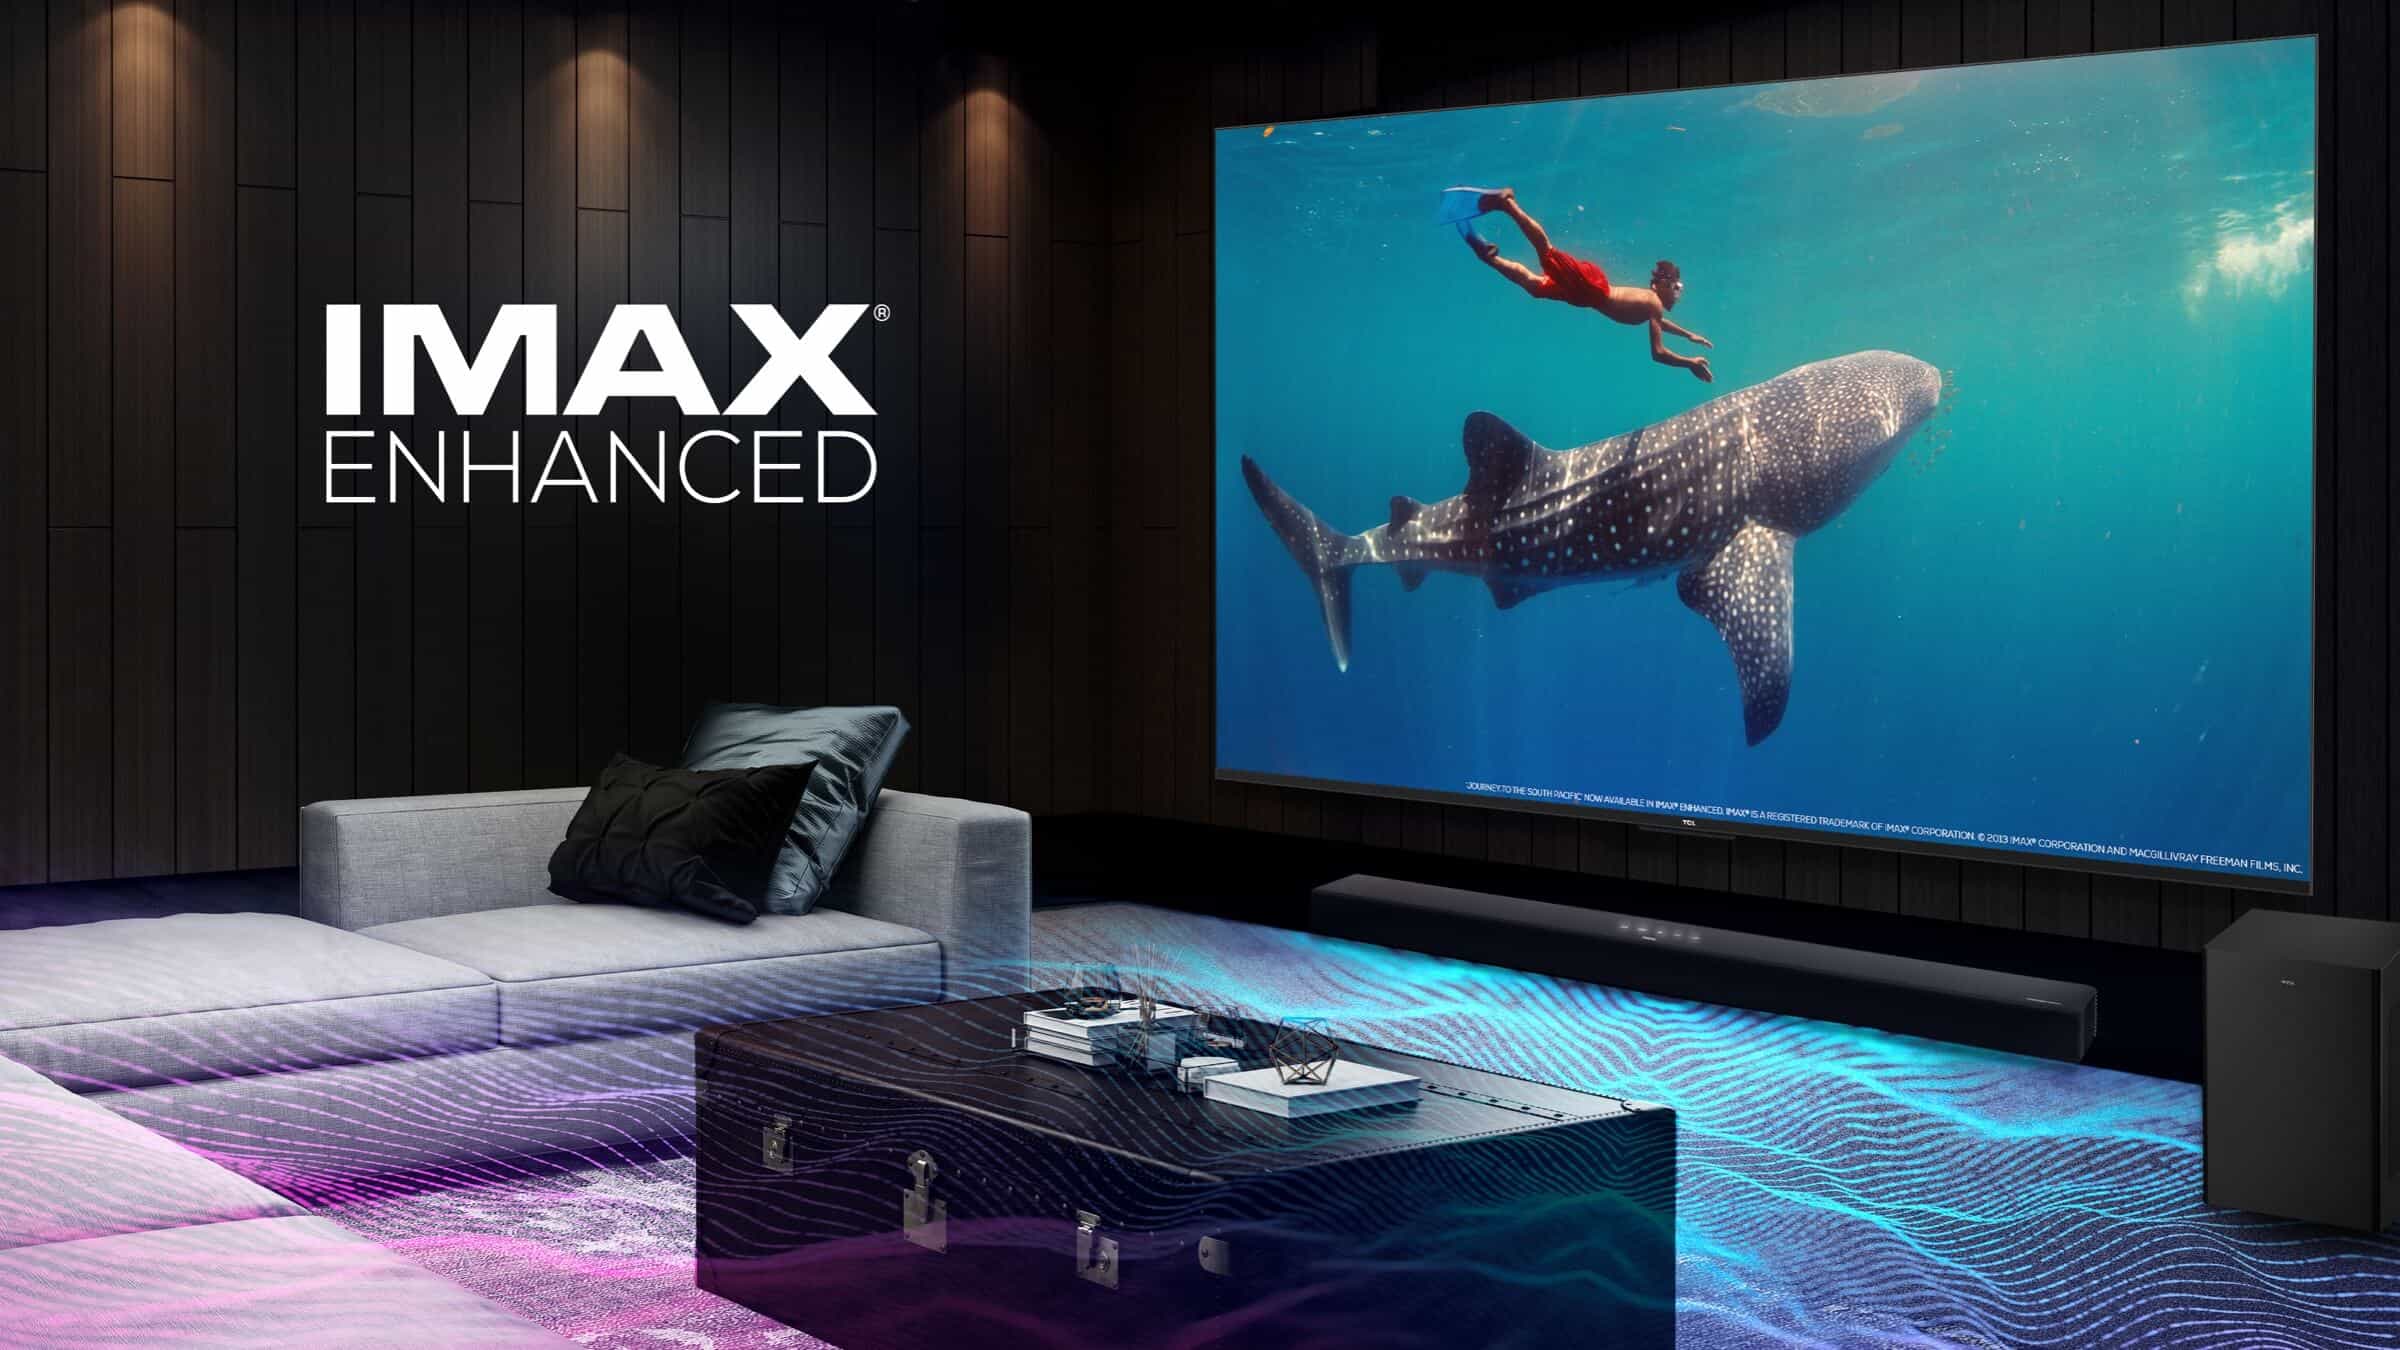 TCL C845 ТВ IMAX Enhanced